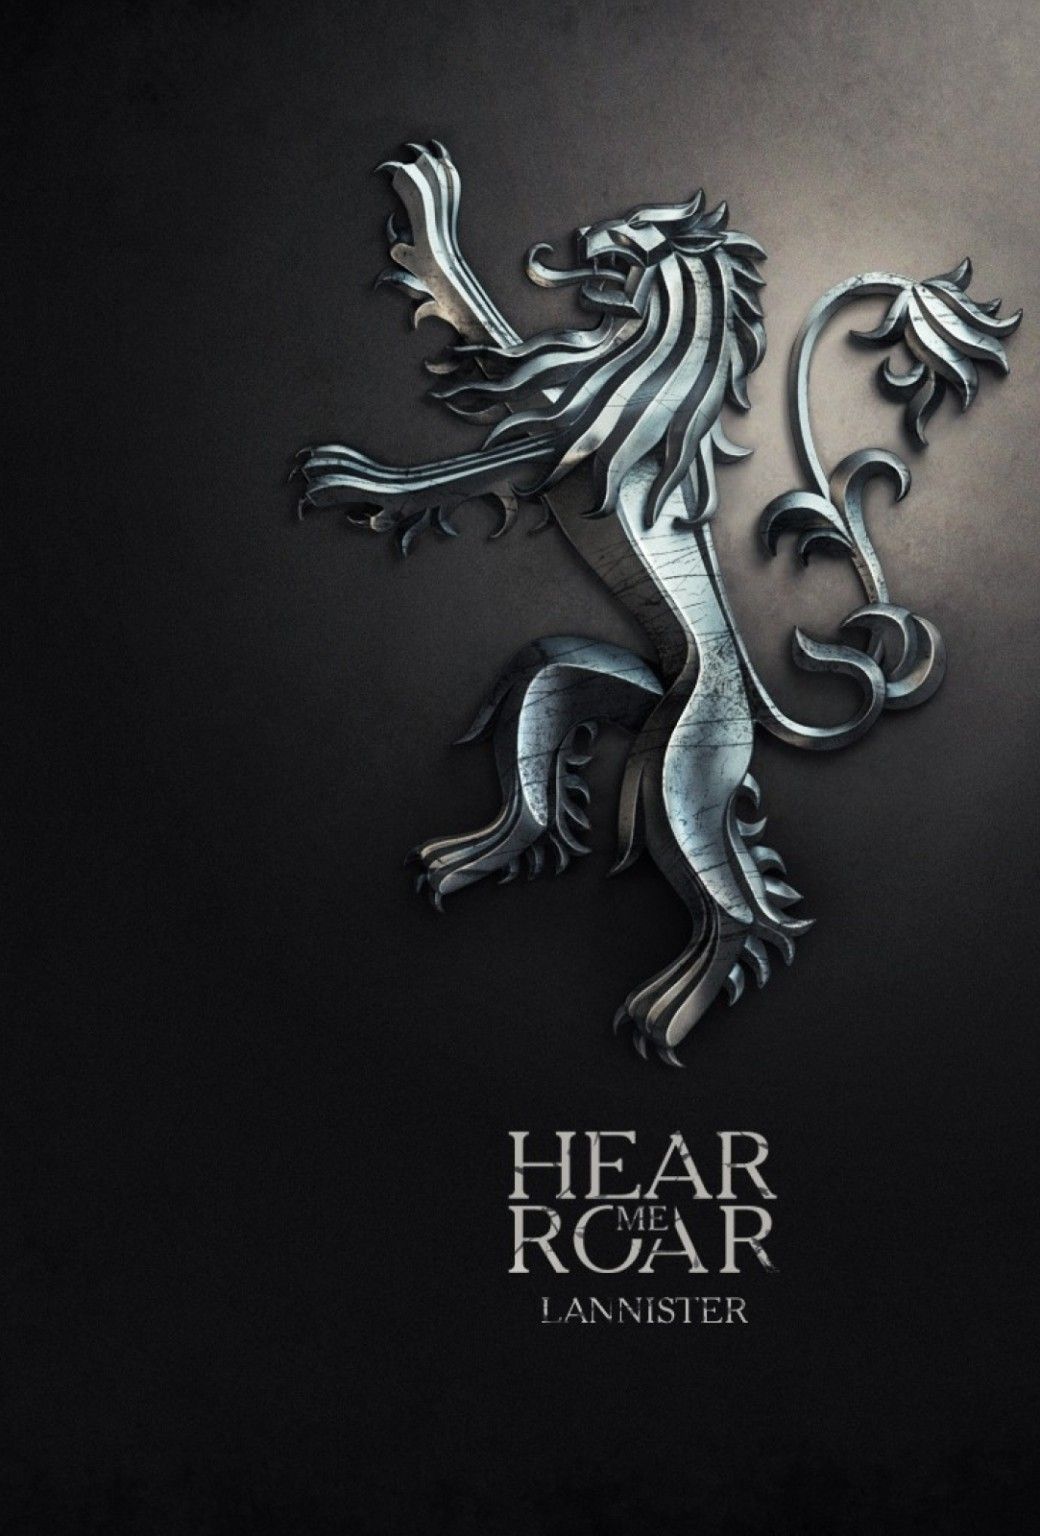 Game of Thrones iPhone Wallpaper